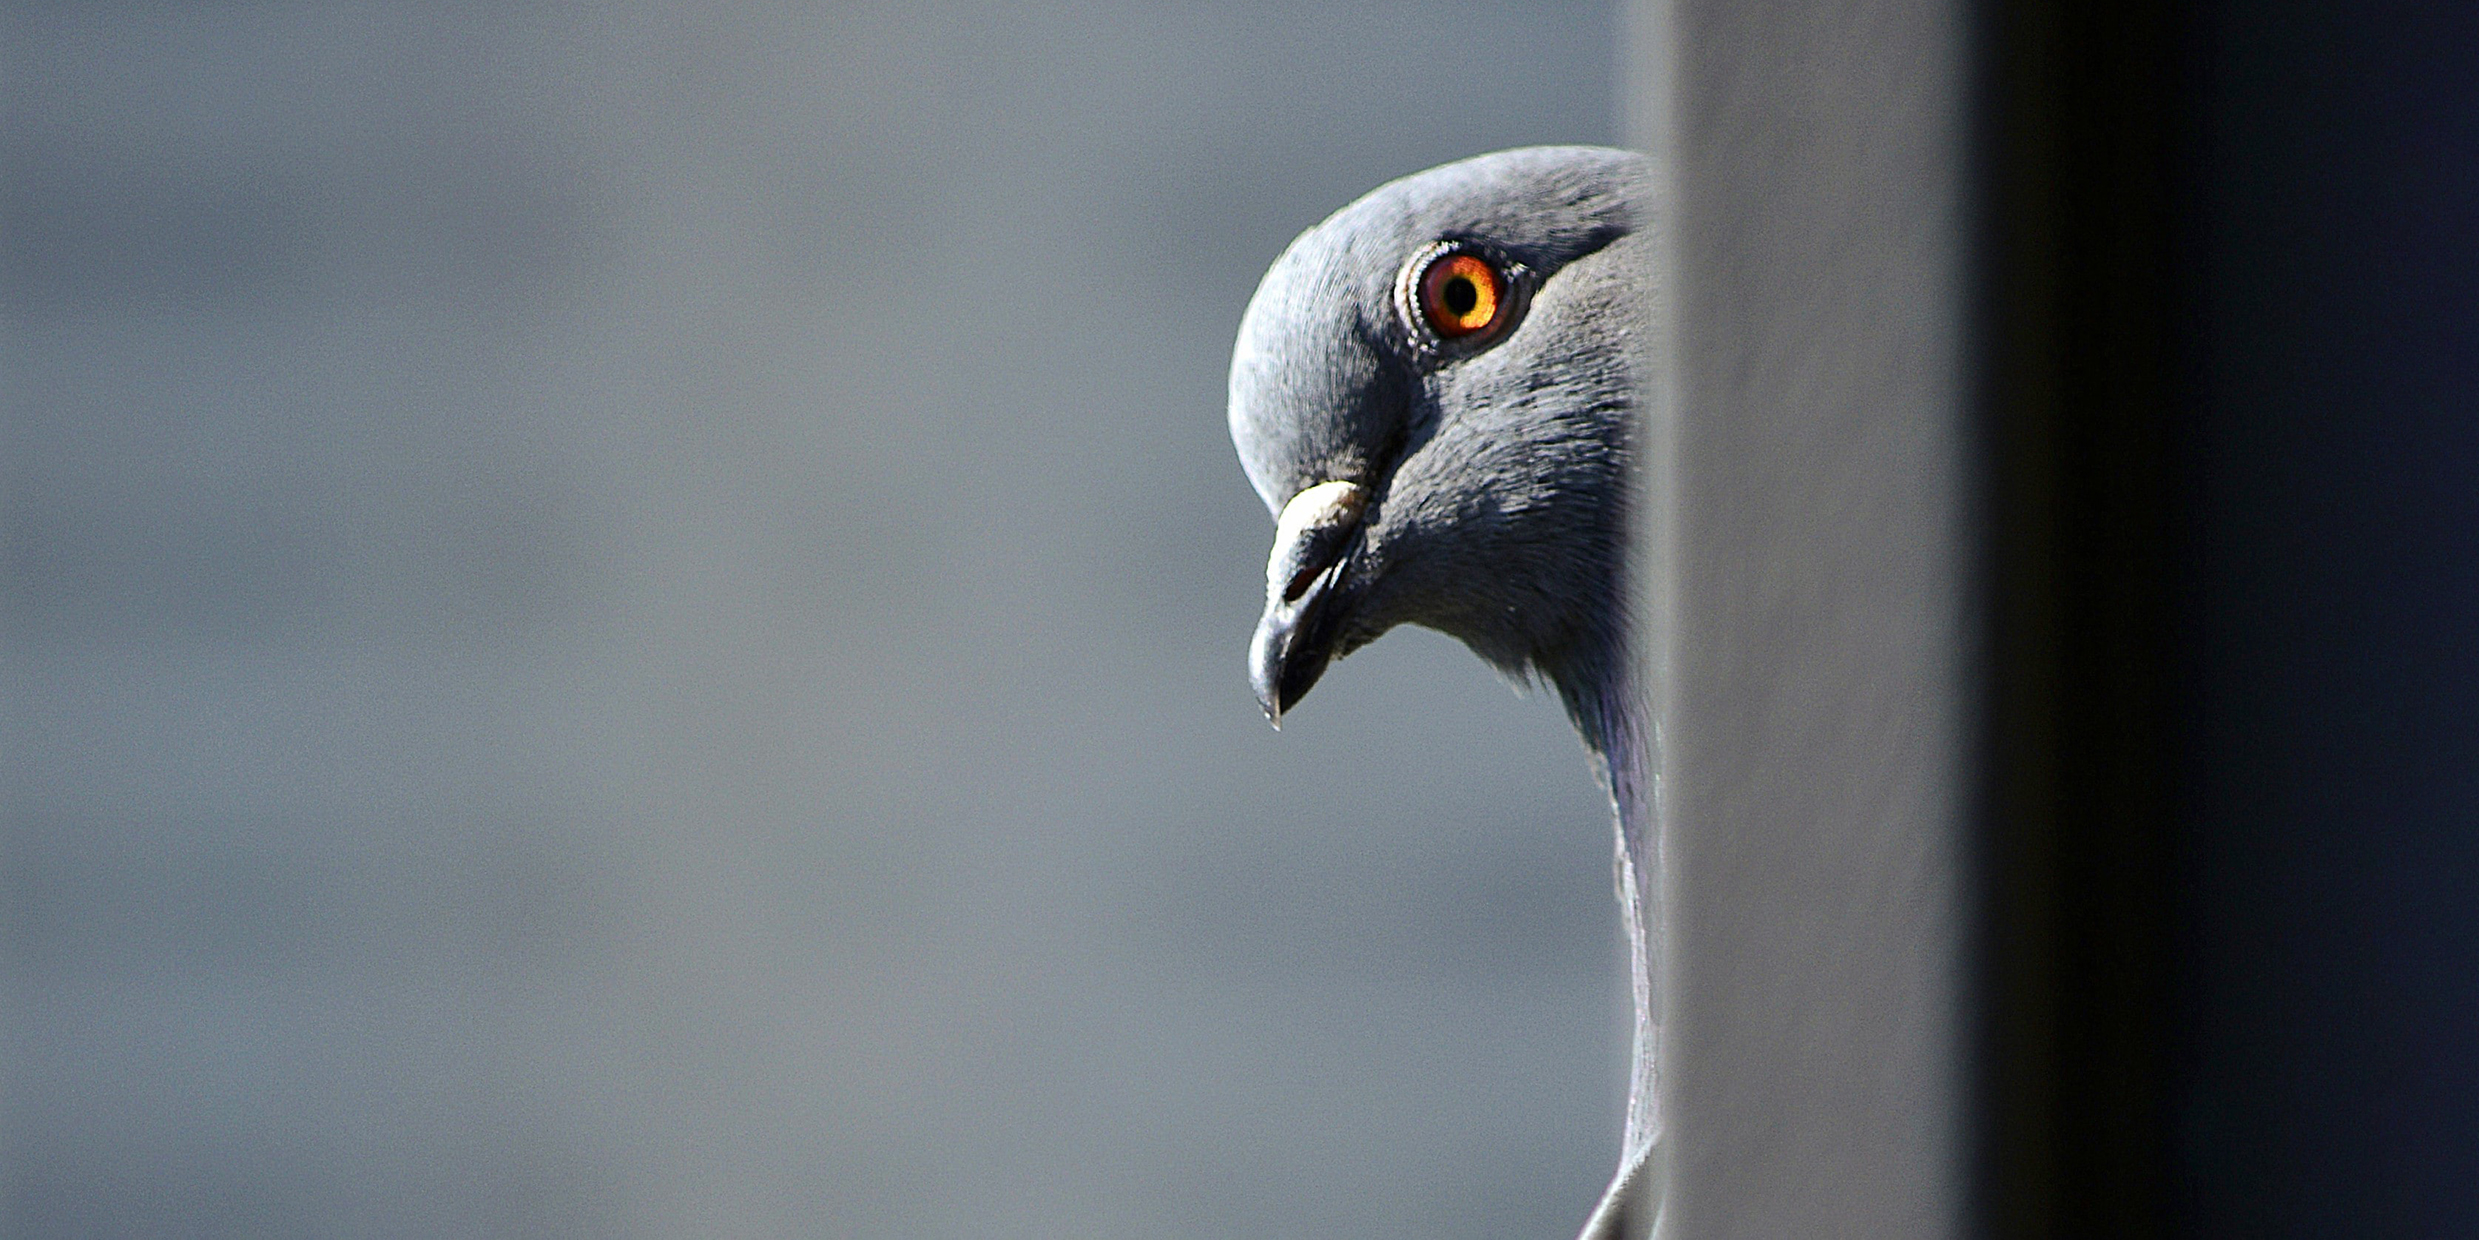 Image of the head of a pigeon peeking around a corner